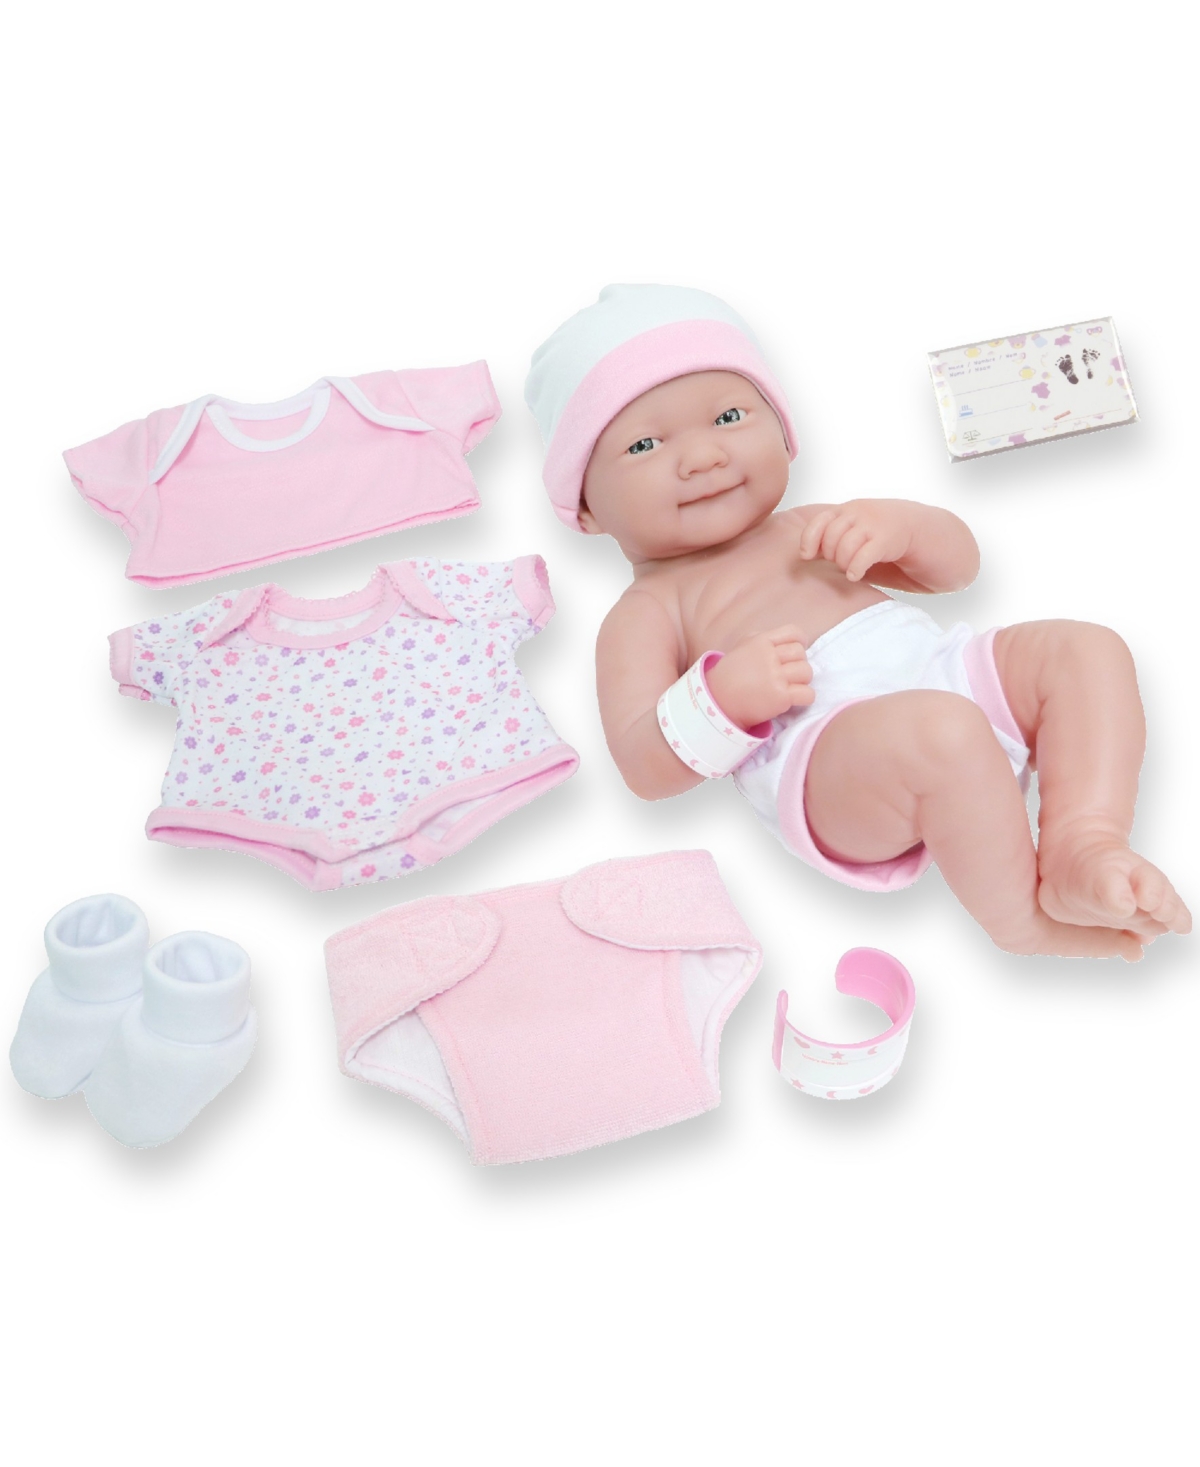 Jc Toys La Newborn Nursery 14" Smiling Baby Doll 8 Pcs Pink Gift Set In Smiling Face - Pink